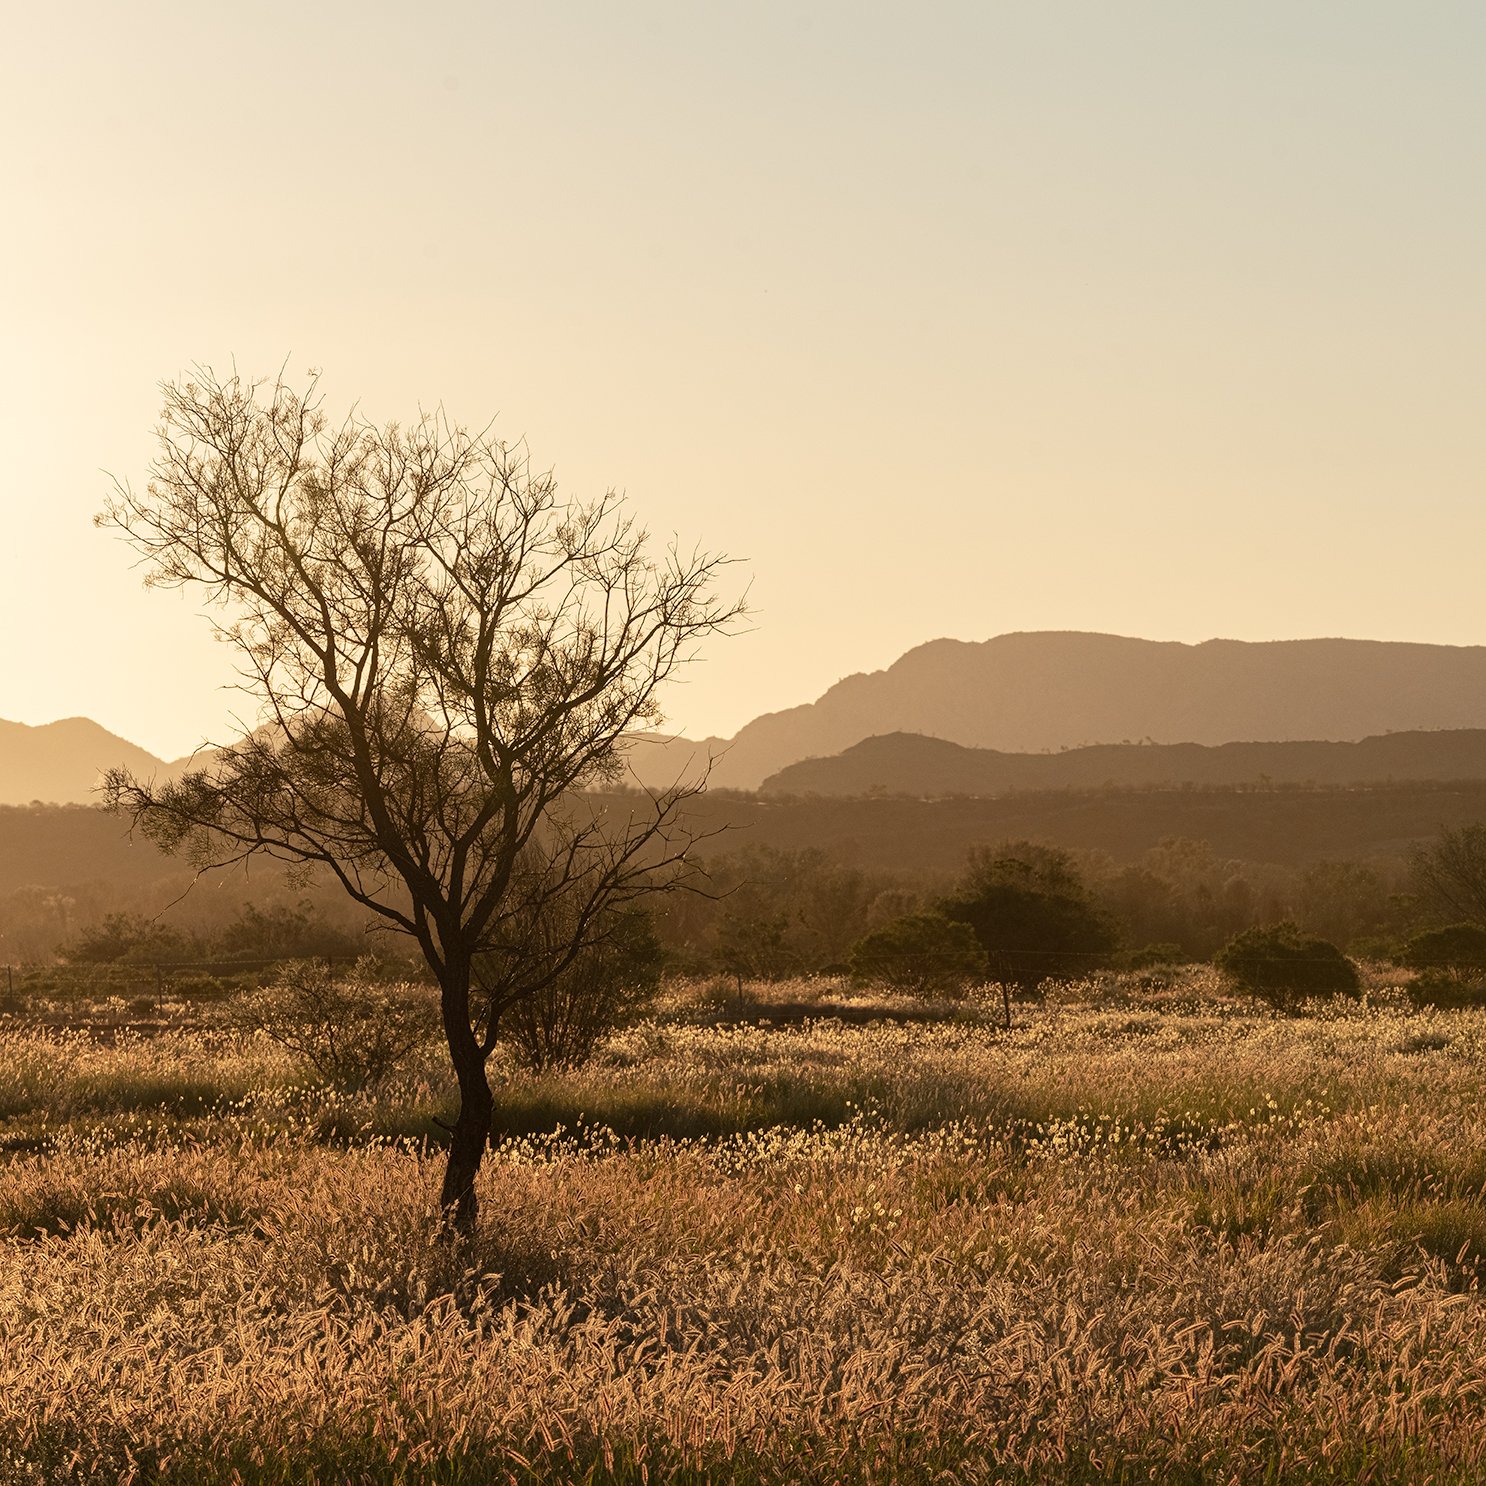 Grass Plains Outback Australia #1: Category - Fields